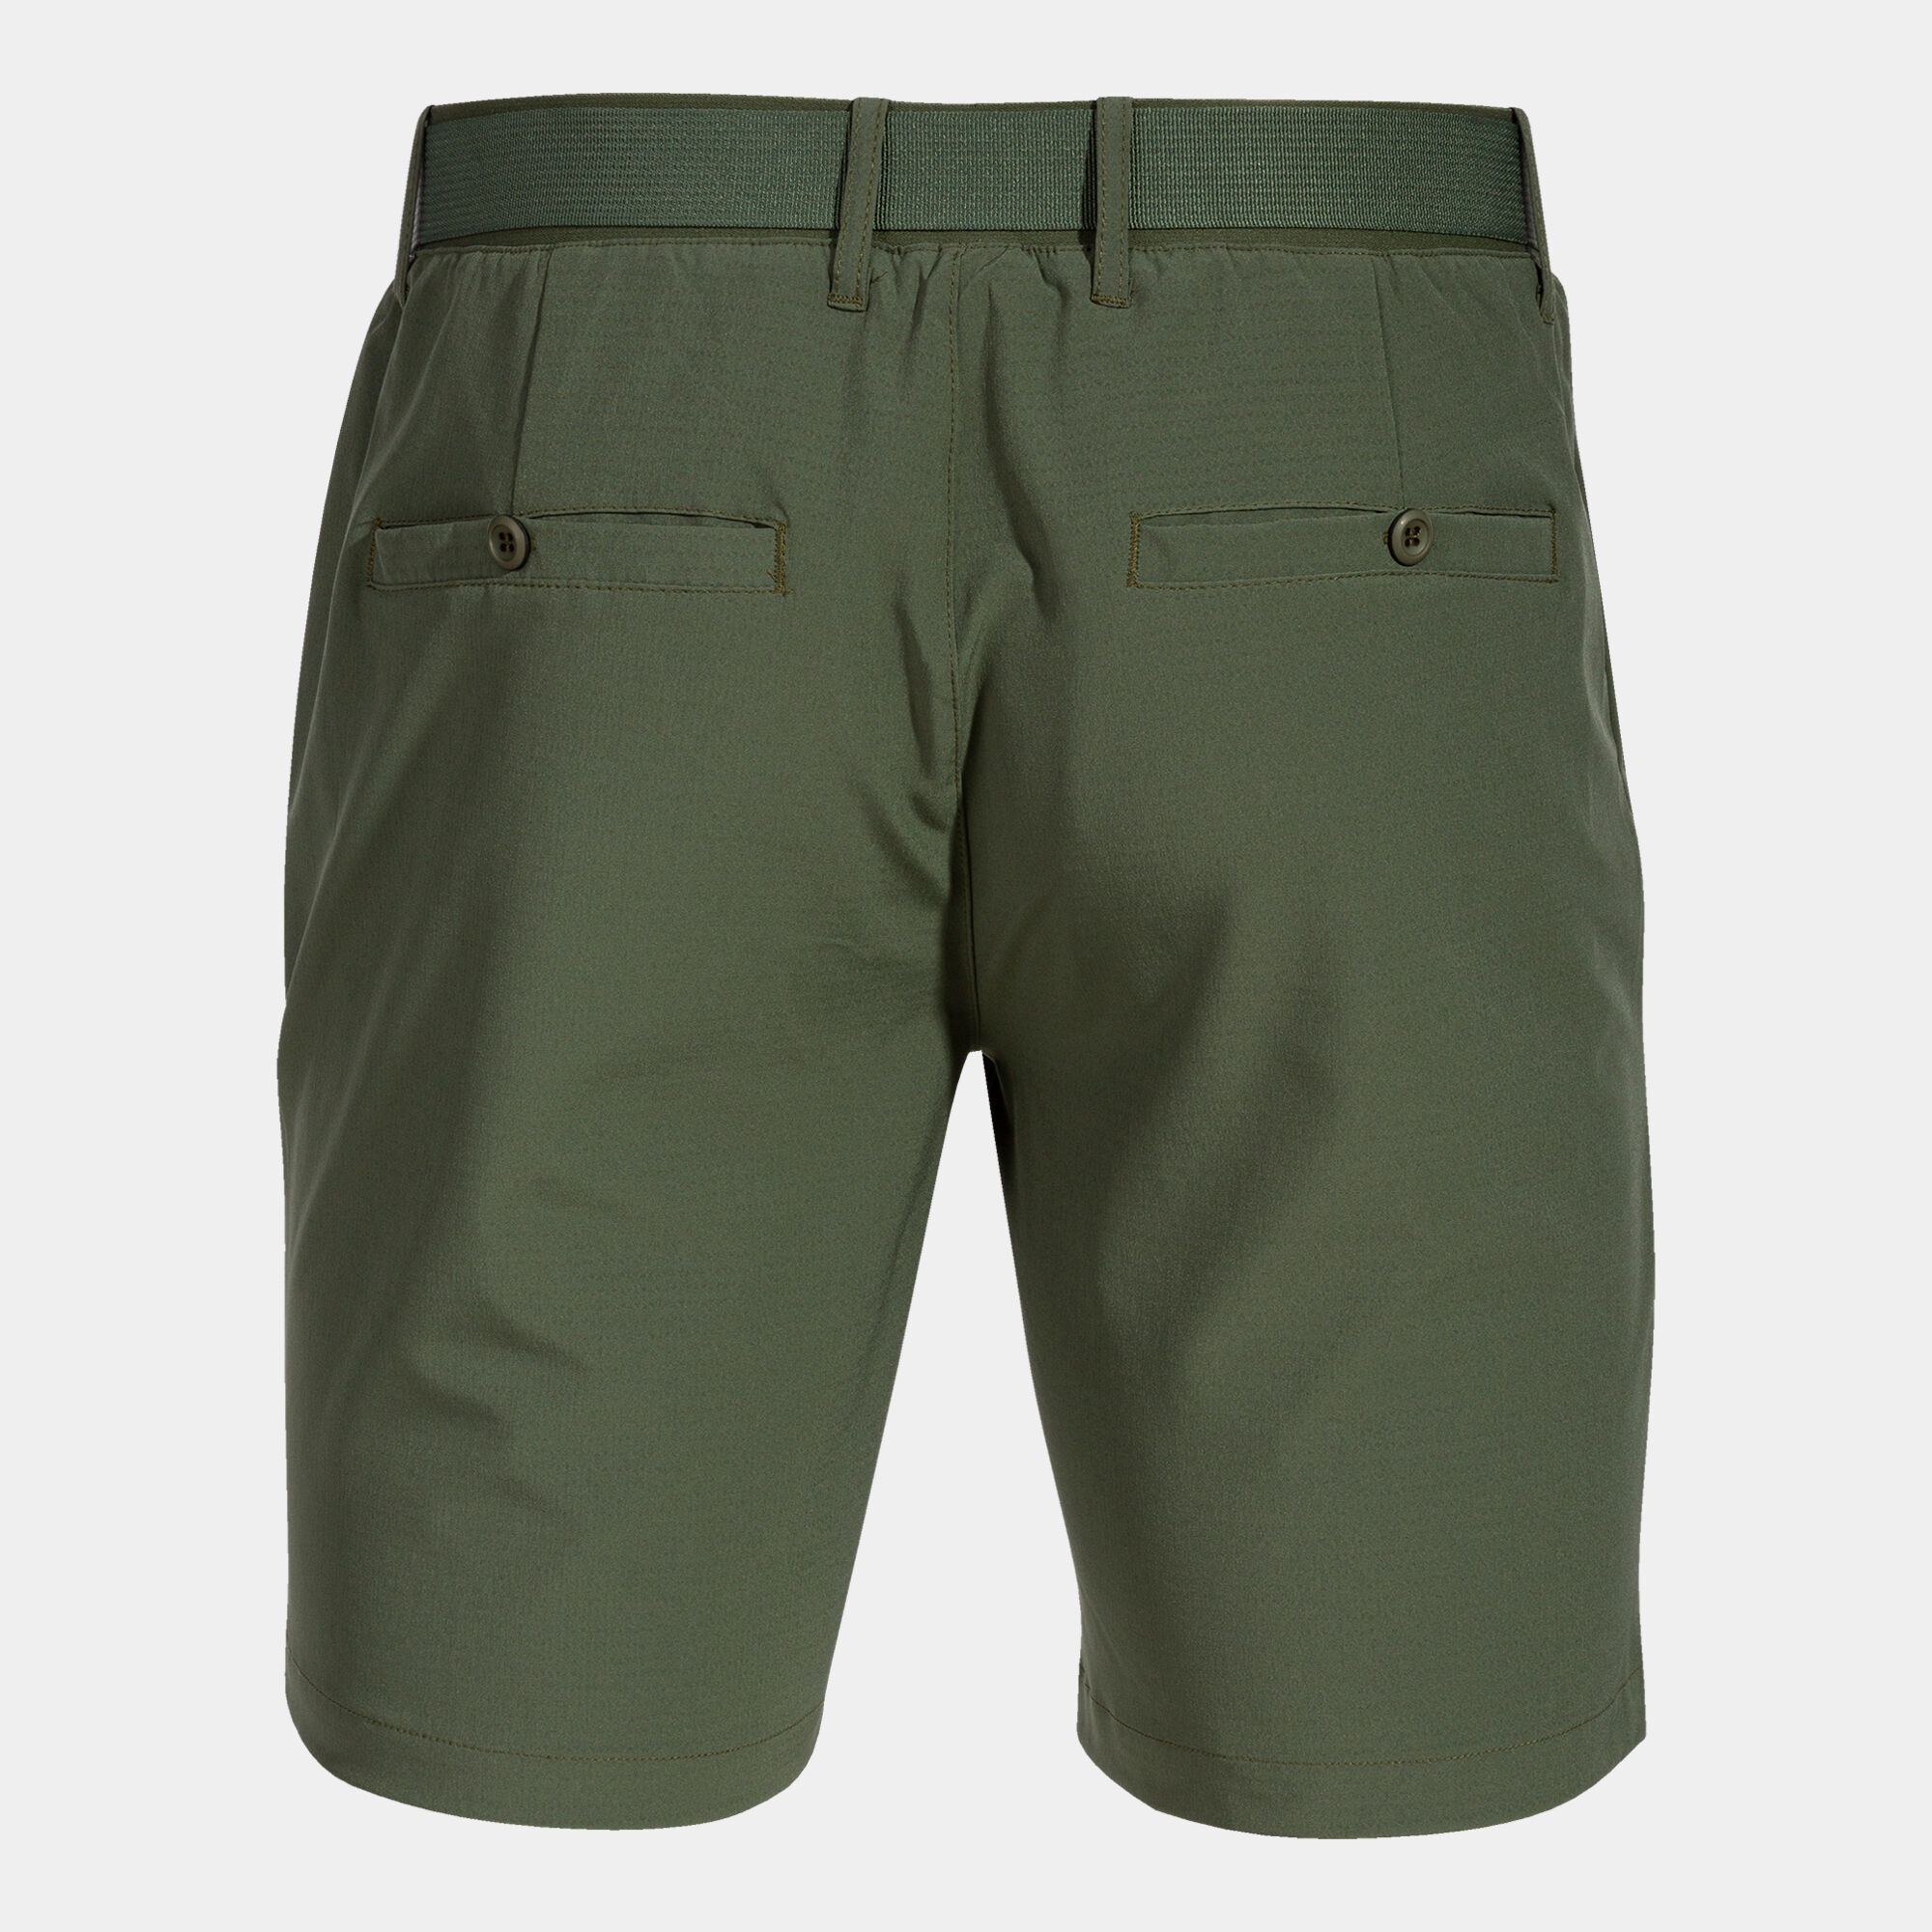 Bermuda shorts man Pasarela III khaki